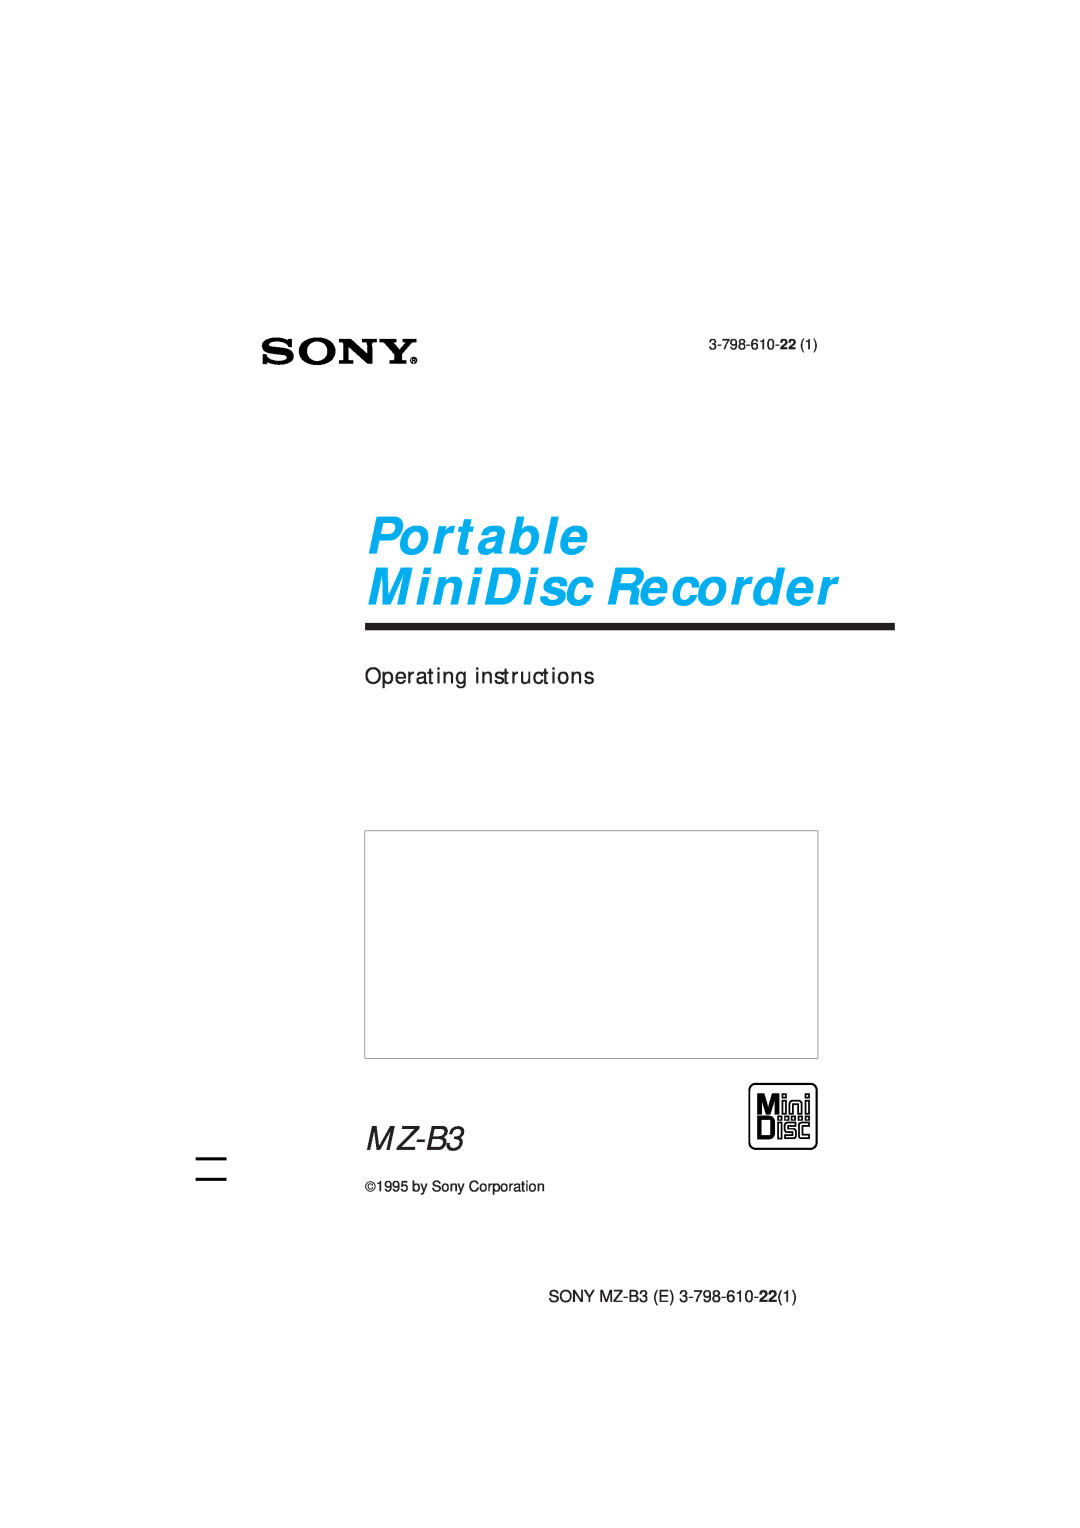 Kenwood manual Portable MiniDisc Recorder, Operating instructions, SONY MZ-B3E, 3-798-610-22, by Sony Corporation 